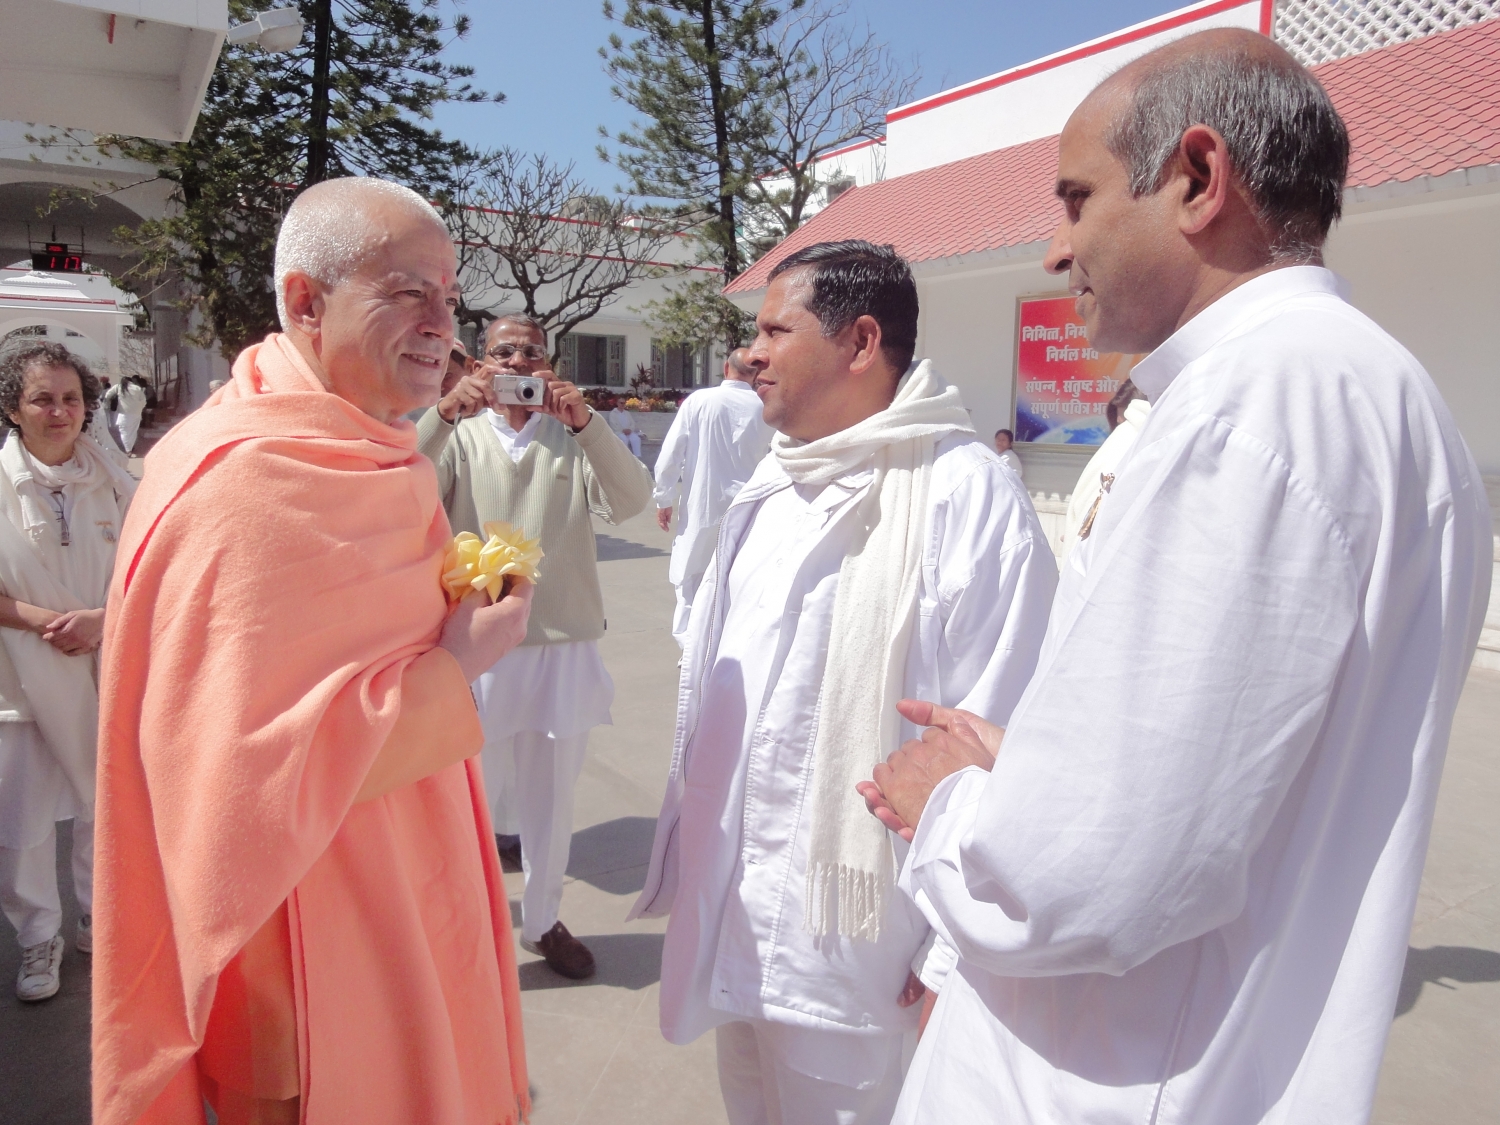 Meeting of H.H. Jagat Guru Amrta Sūryānanda Mahā Rāja with B.K. Dadi Janki - Brahma Kumaris, Mount Abu, India – 2011